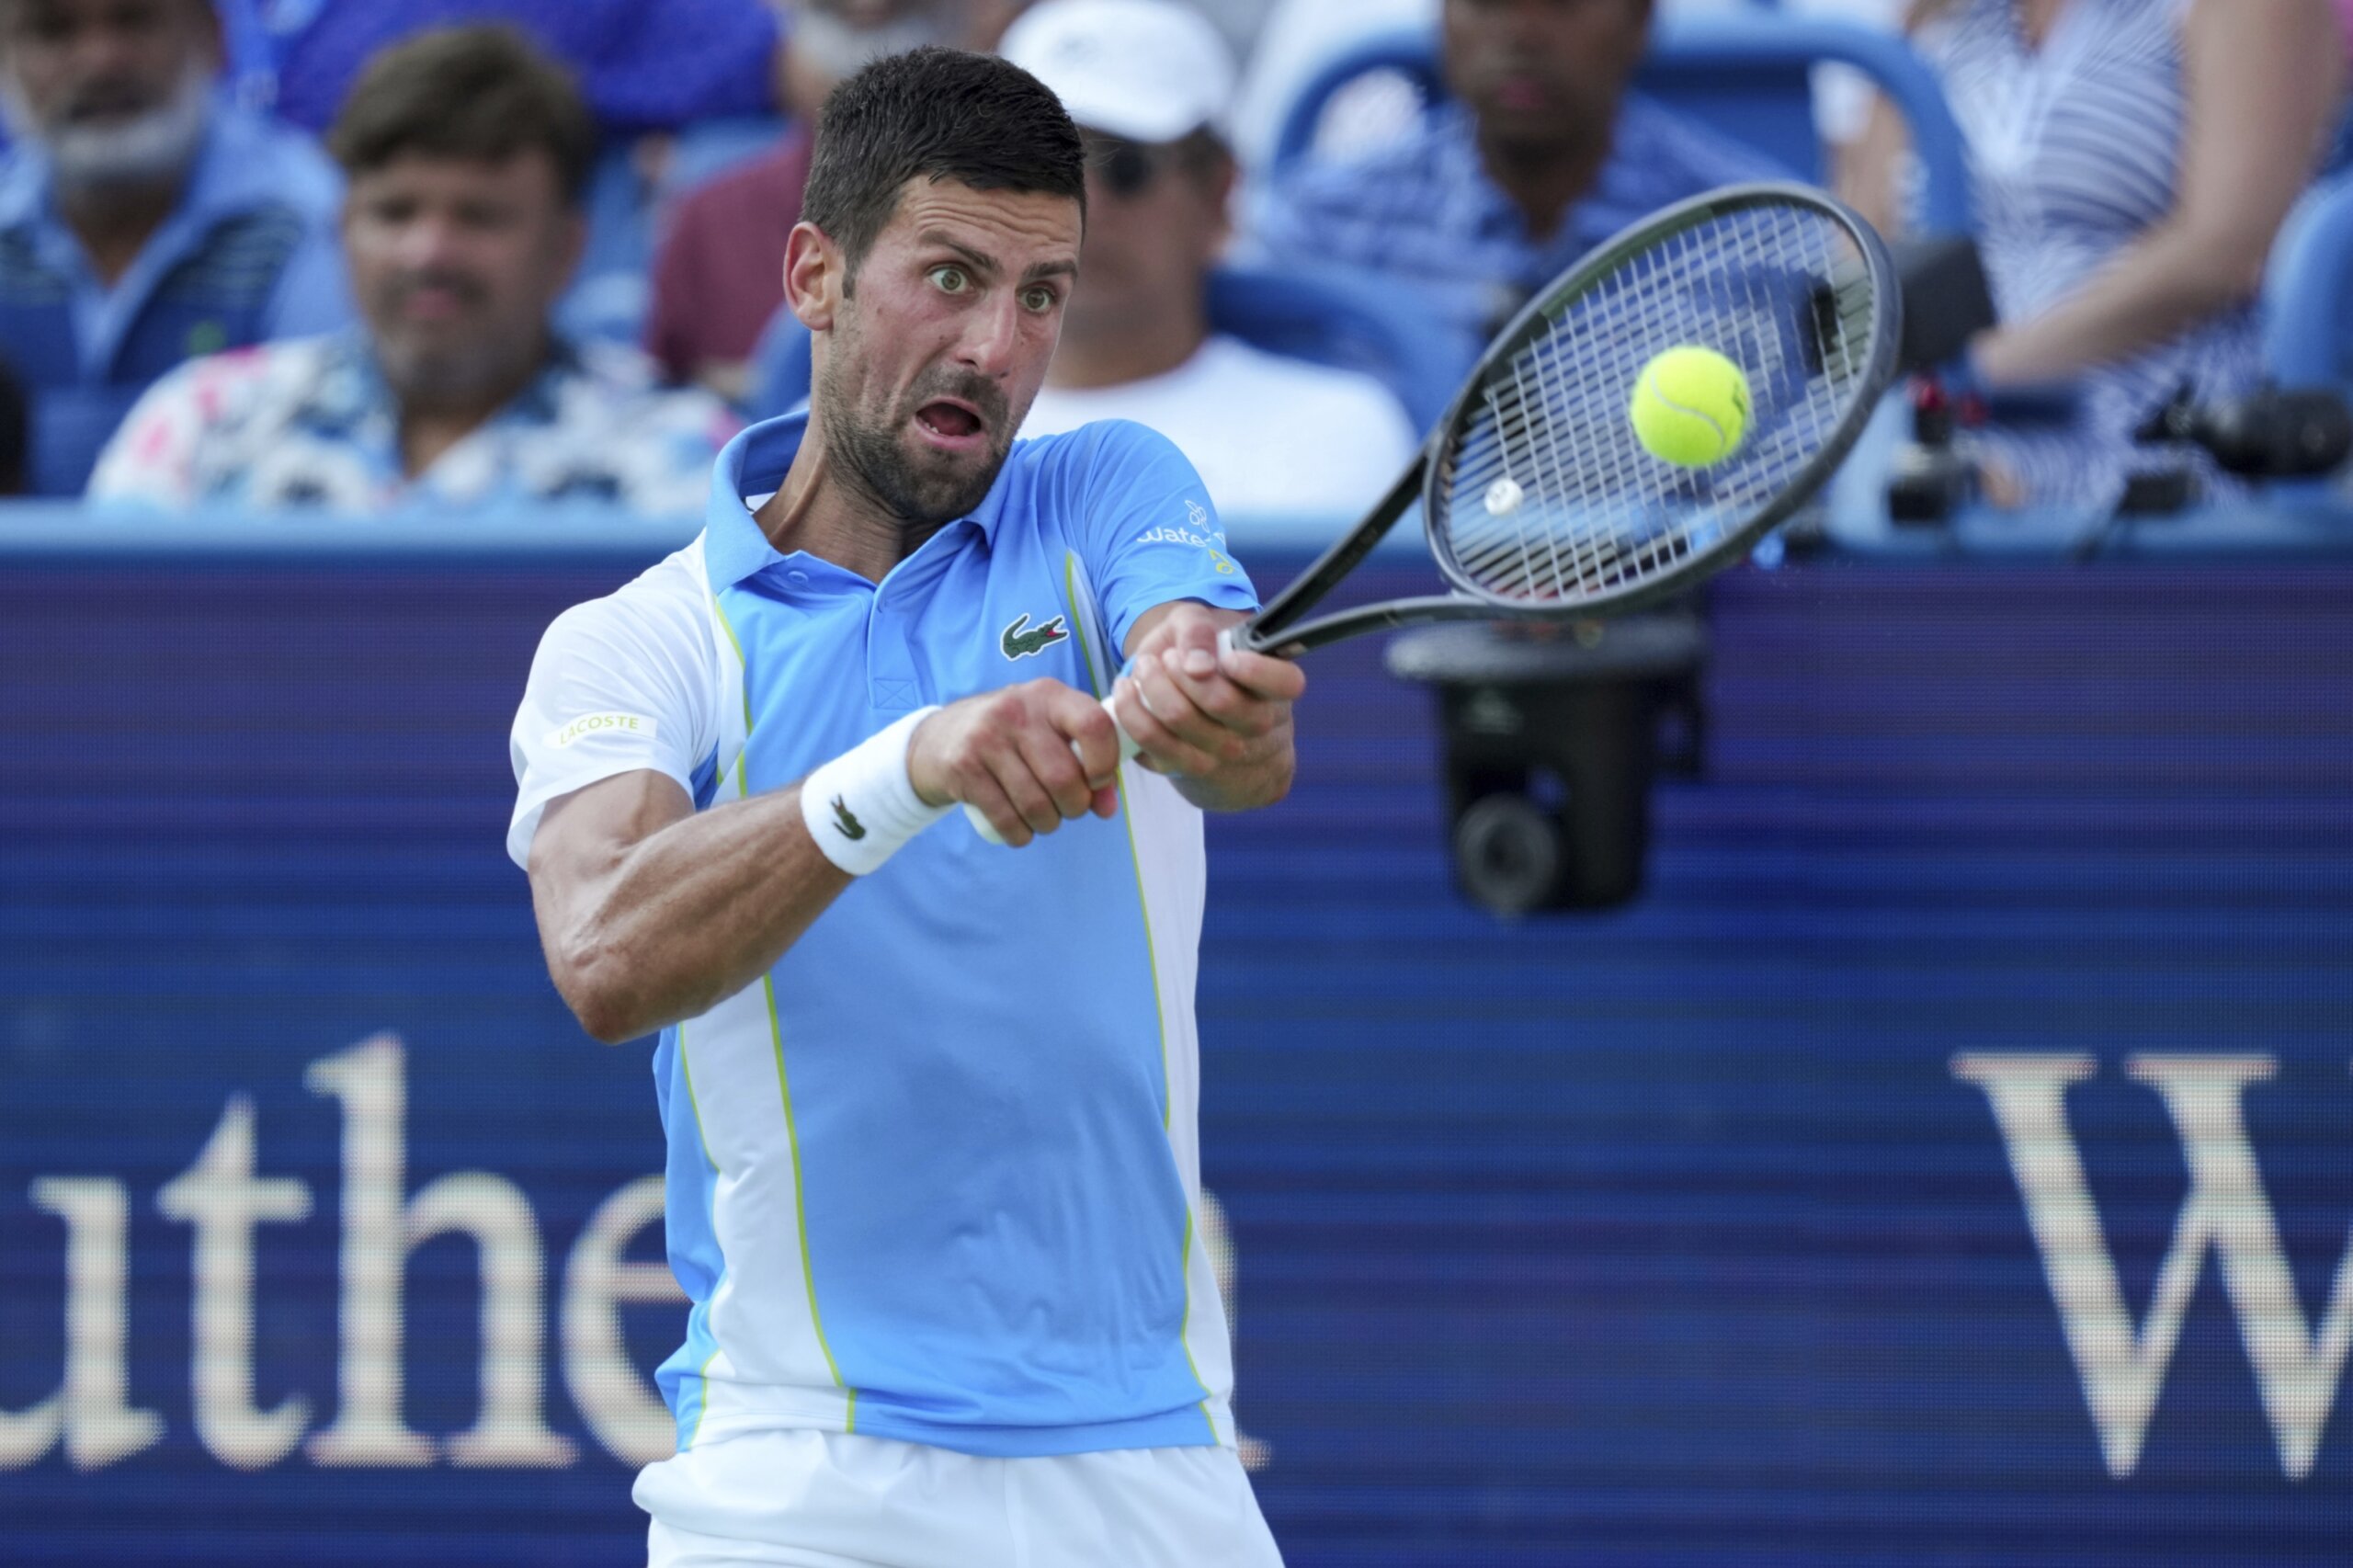 Djokovic back to business in Cincinnati - in Sinner's part of the